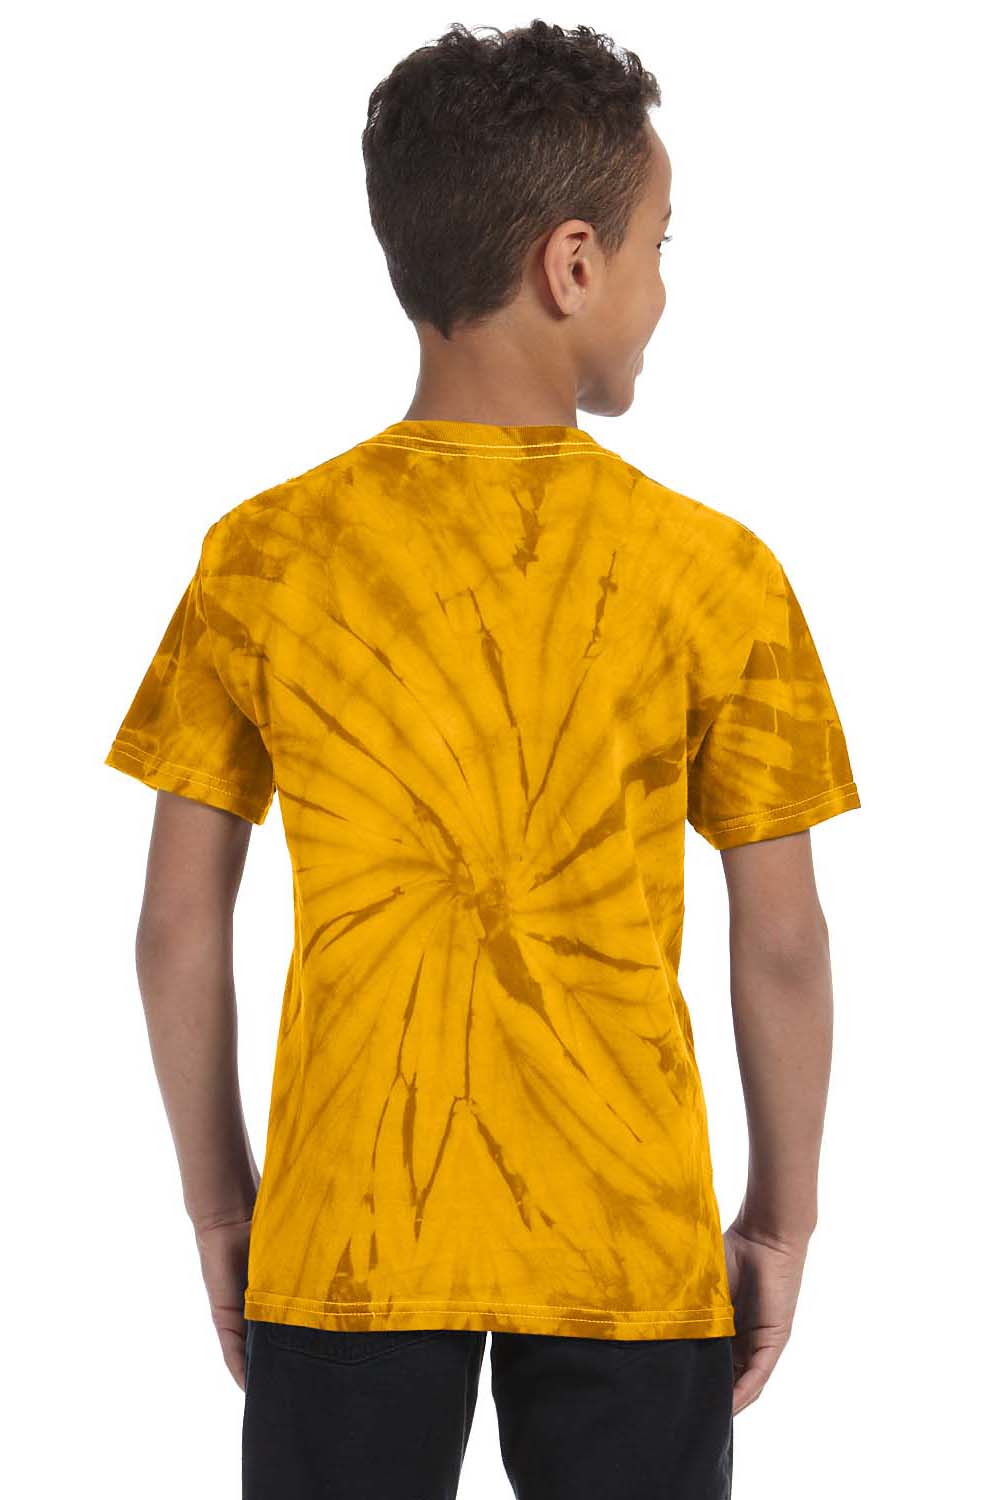 Tie-Dye CD101Y Youth Short Sleeve Crewneck T-Shirt Gold Back